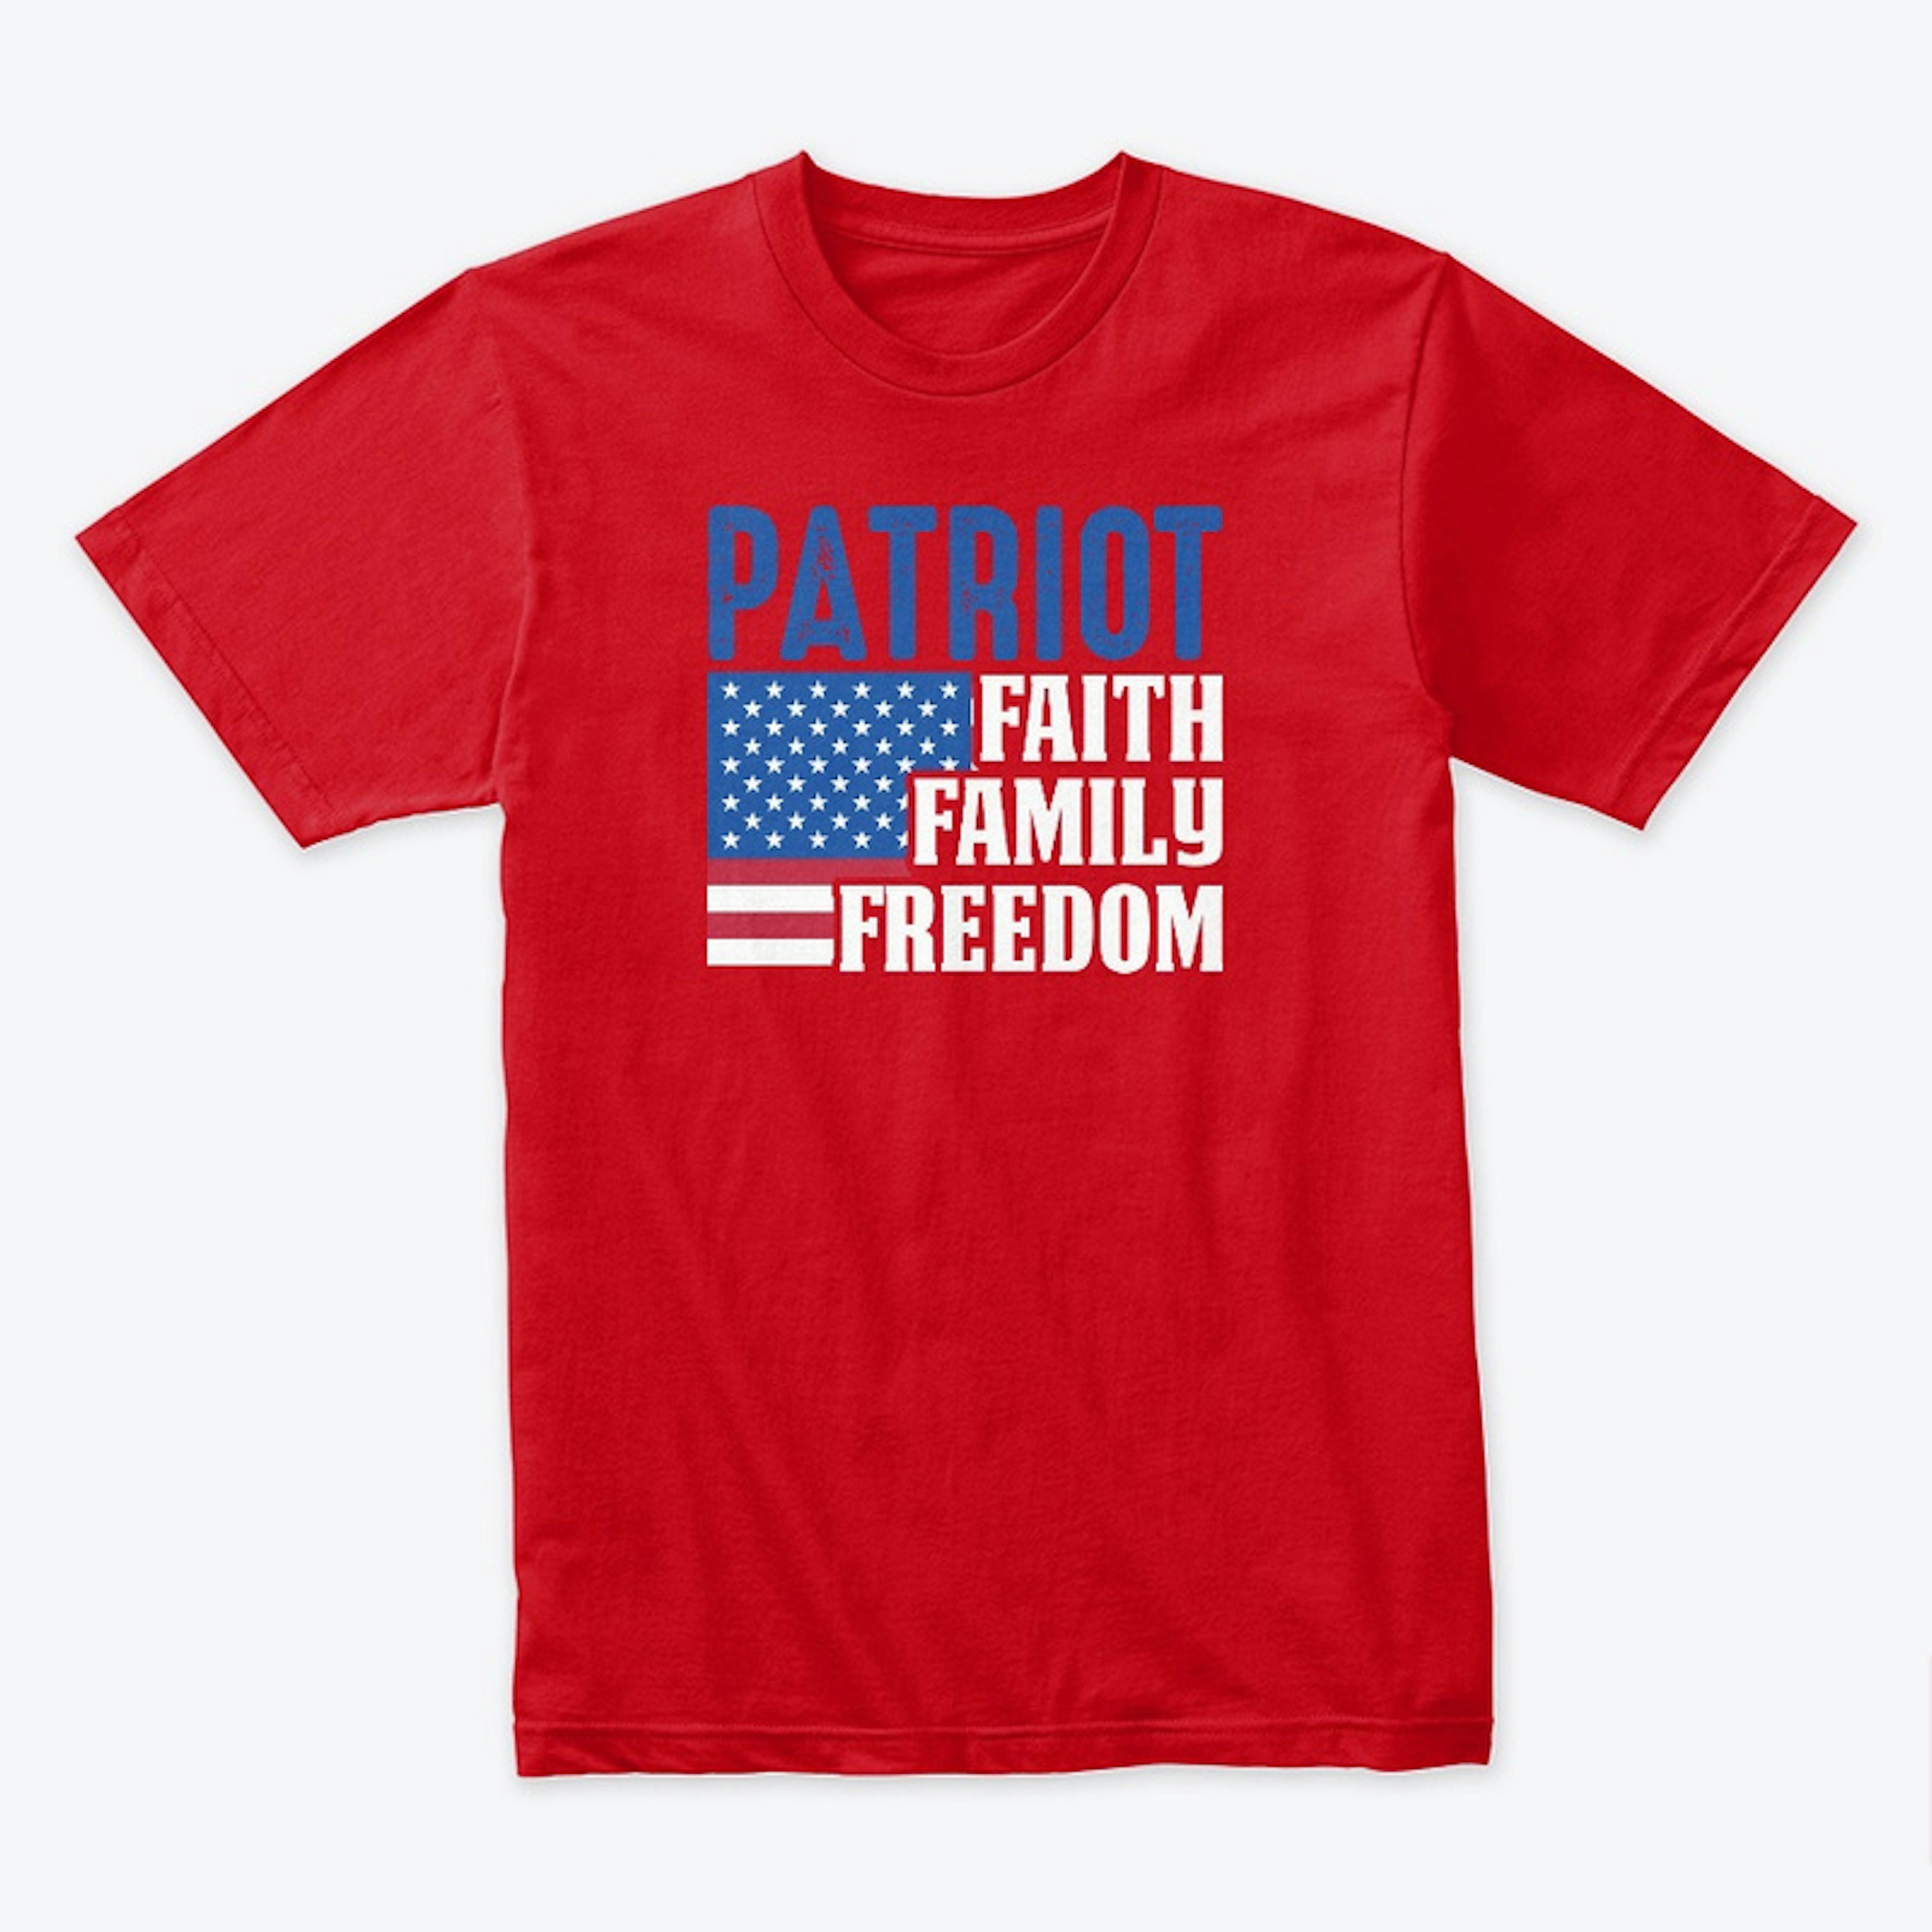 PATRIOT Faith Family Freedom RED